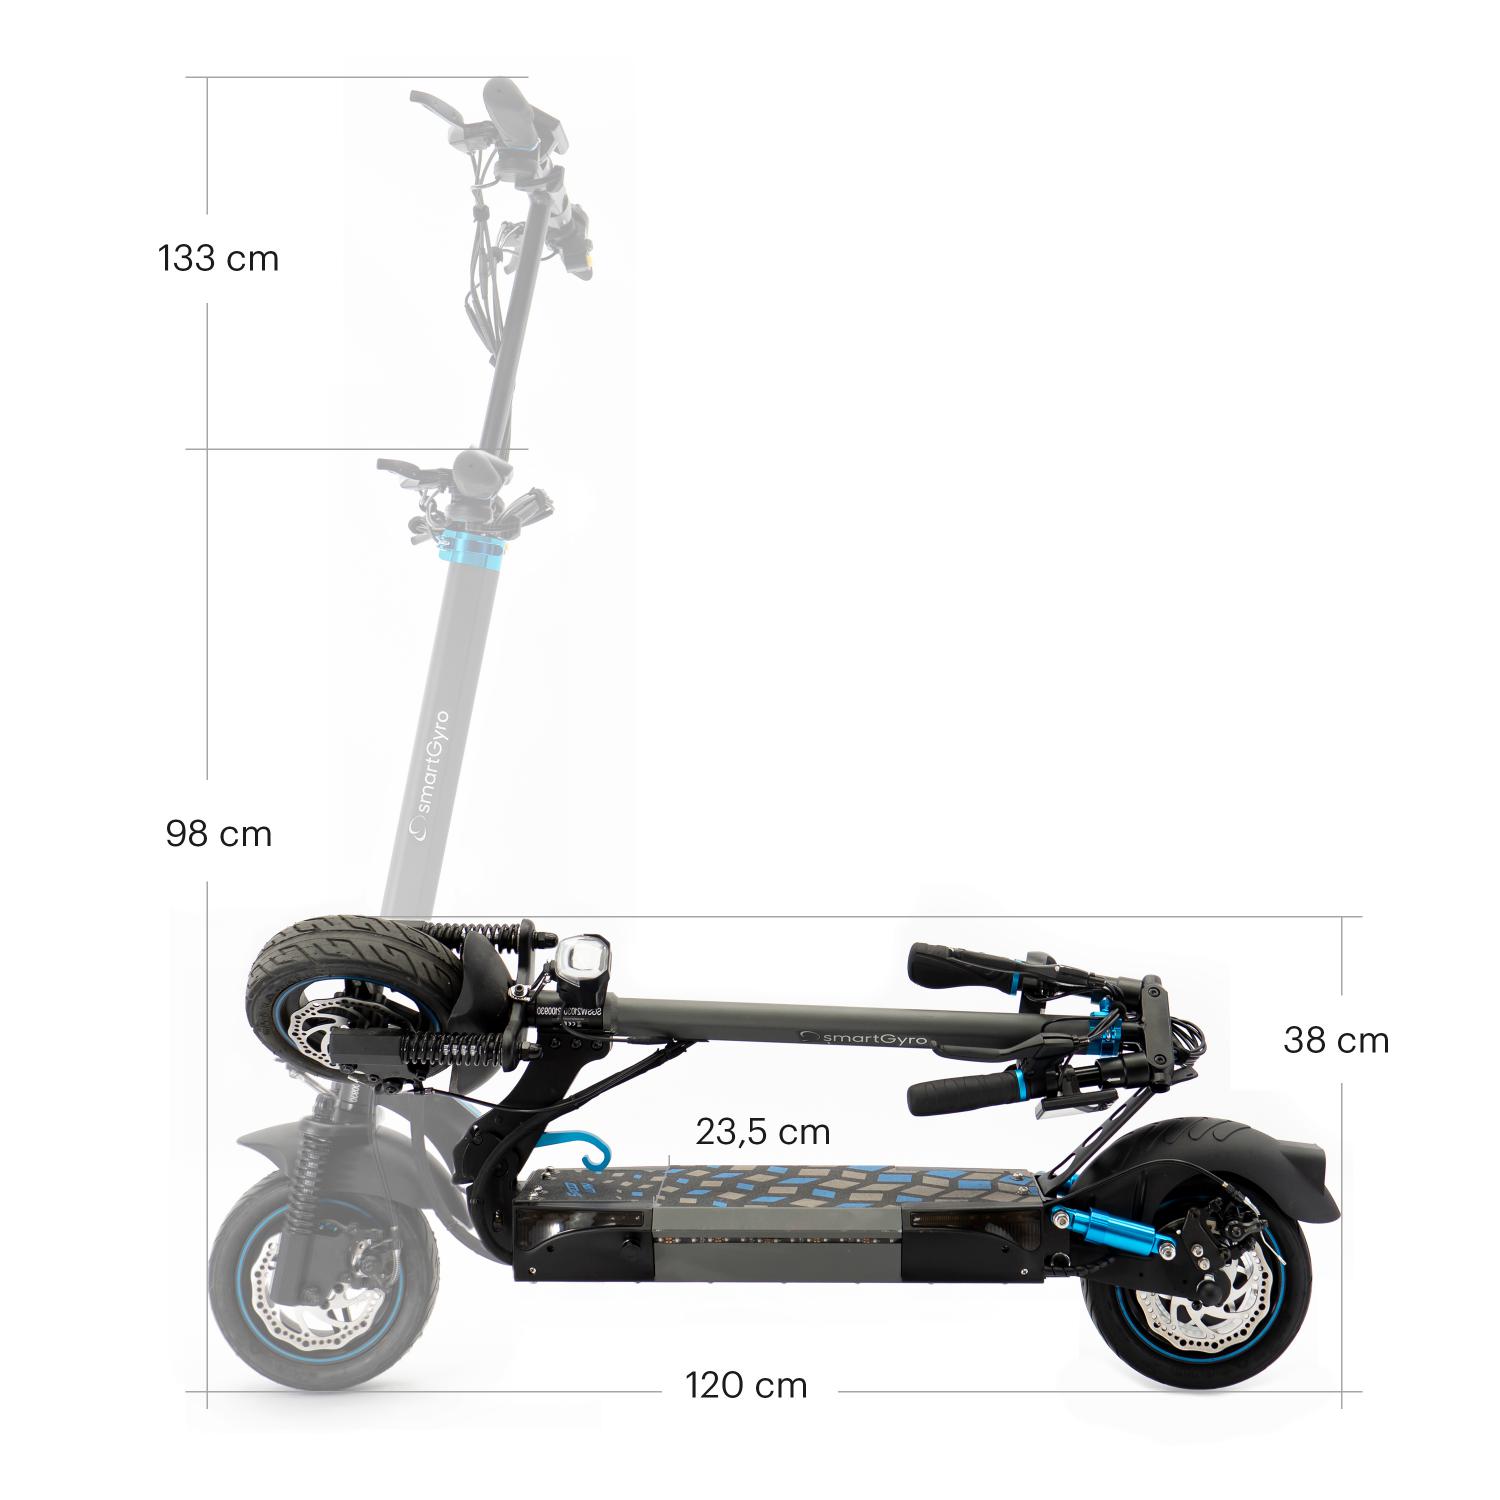 Patinete eléctrico smartGyro CROSSOVER DUAL MAX Certificado - 360Scooters